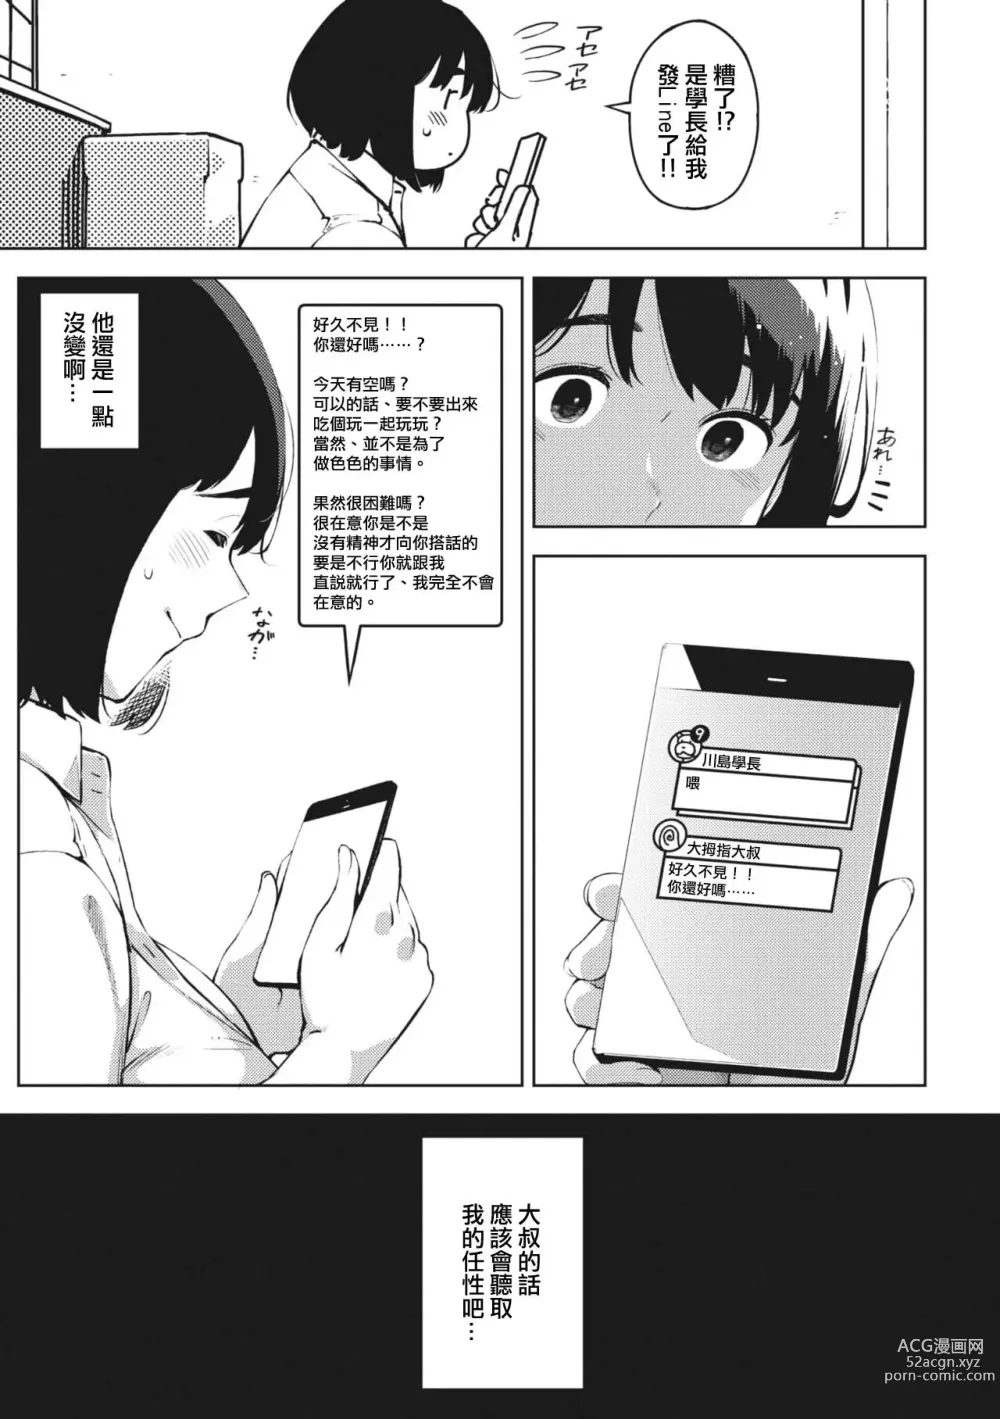 Page 9 of manga H shitai Kanojo Kouhen